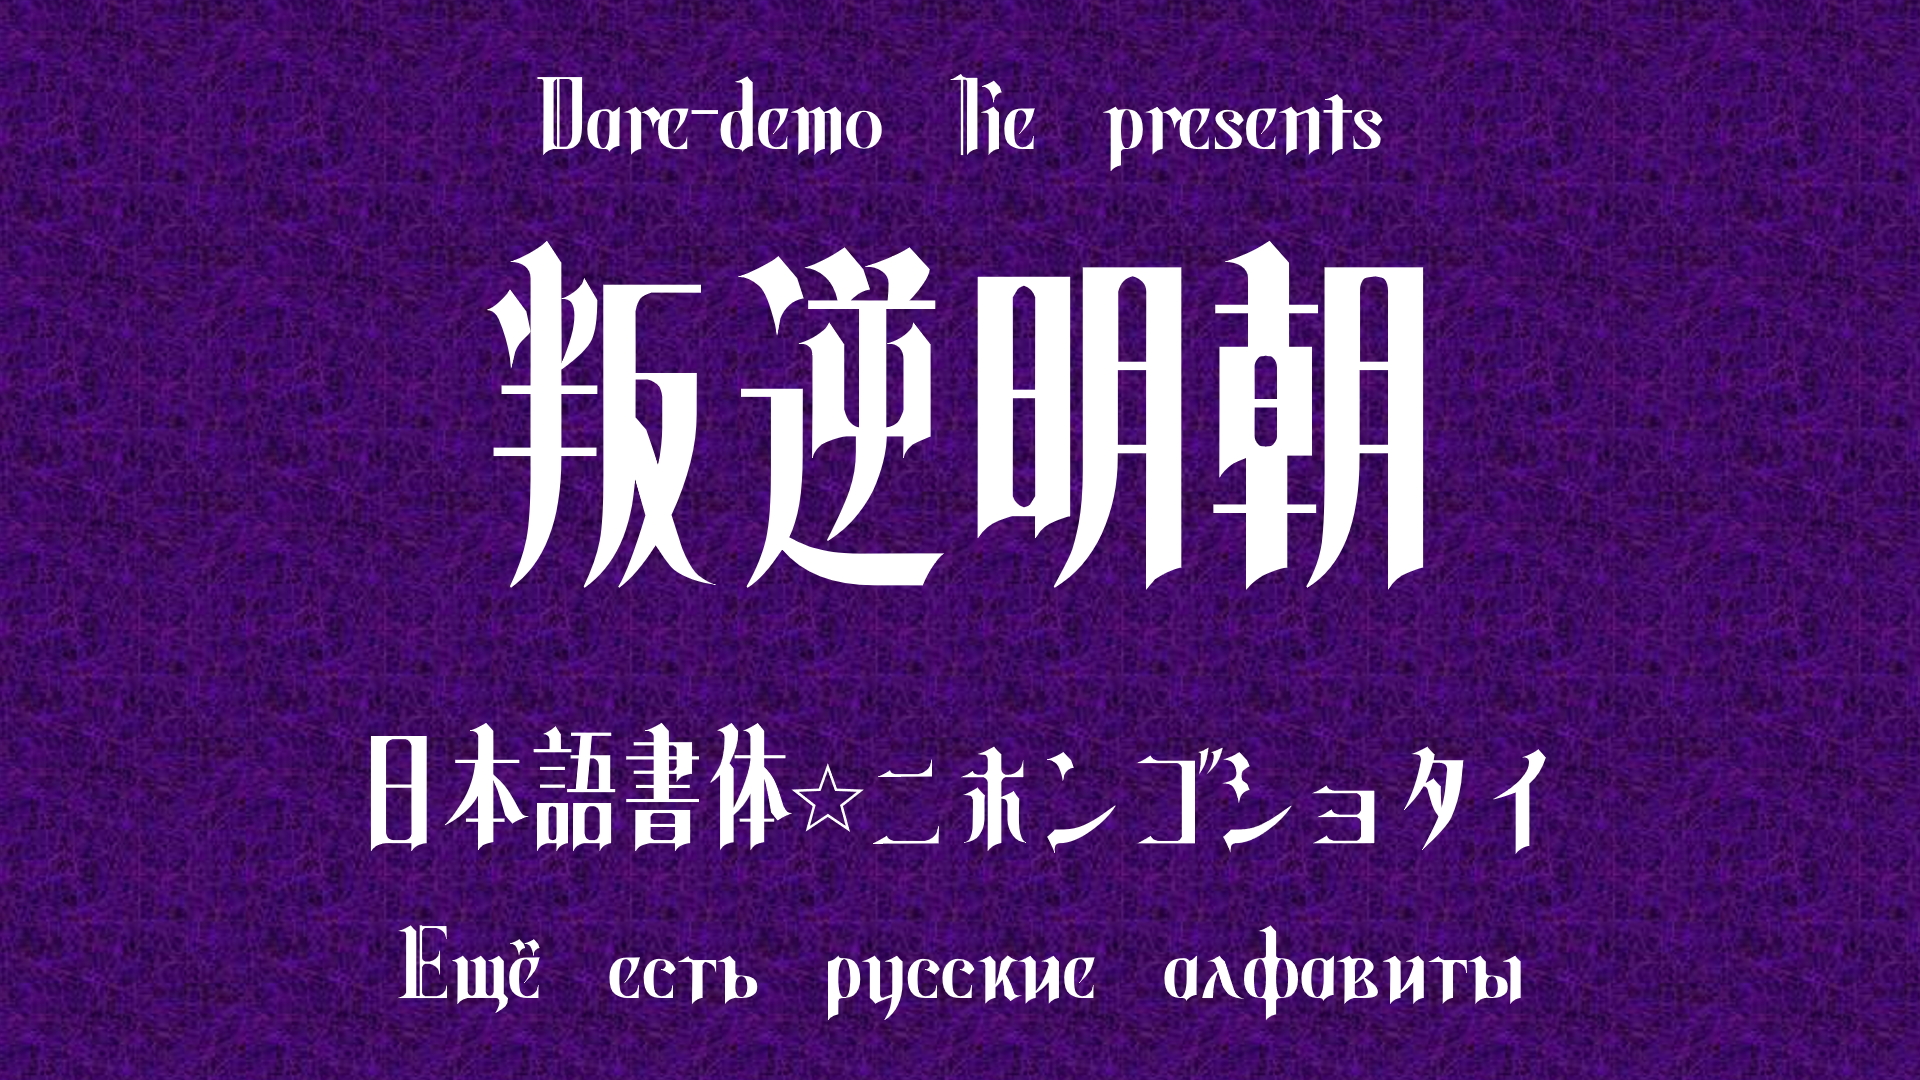 Hangyaku Font Daredemotypo Fontspace